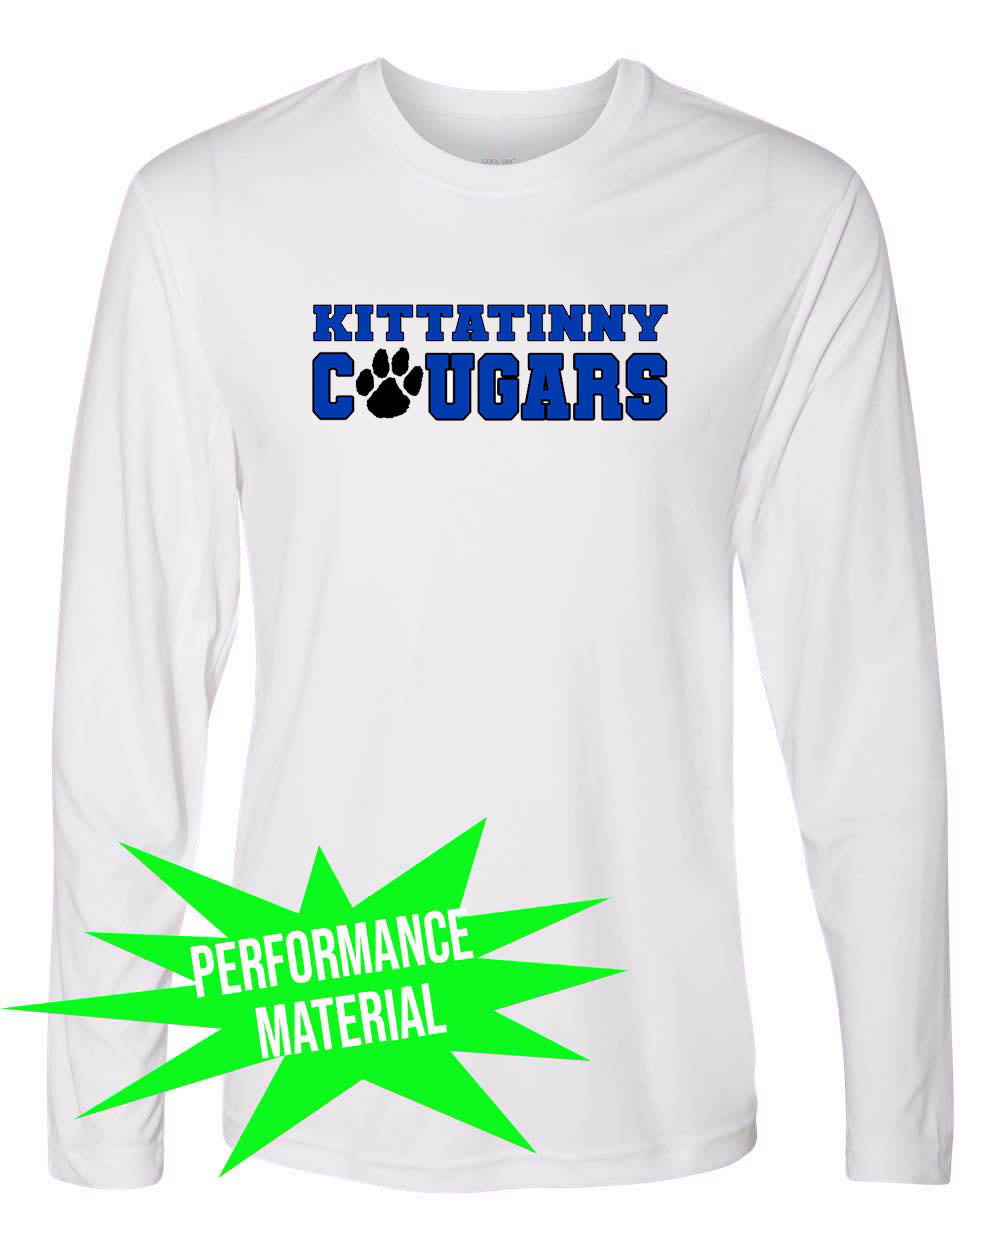 KRHS Performance Material Design 6 Long Sleeve Shirt